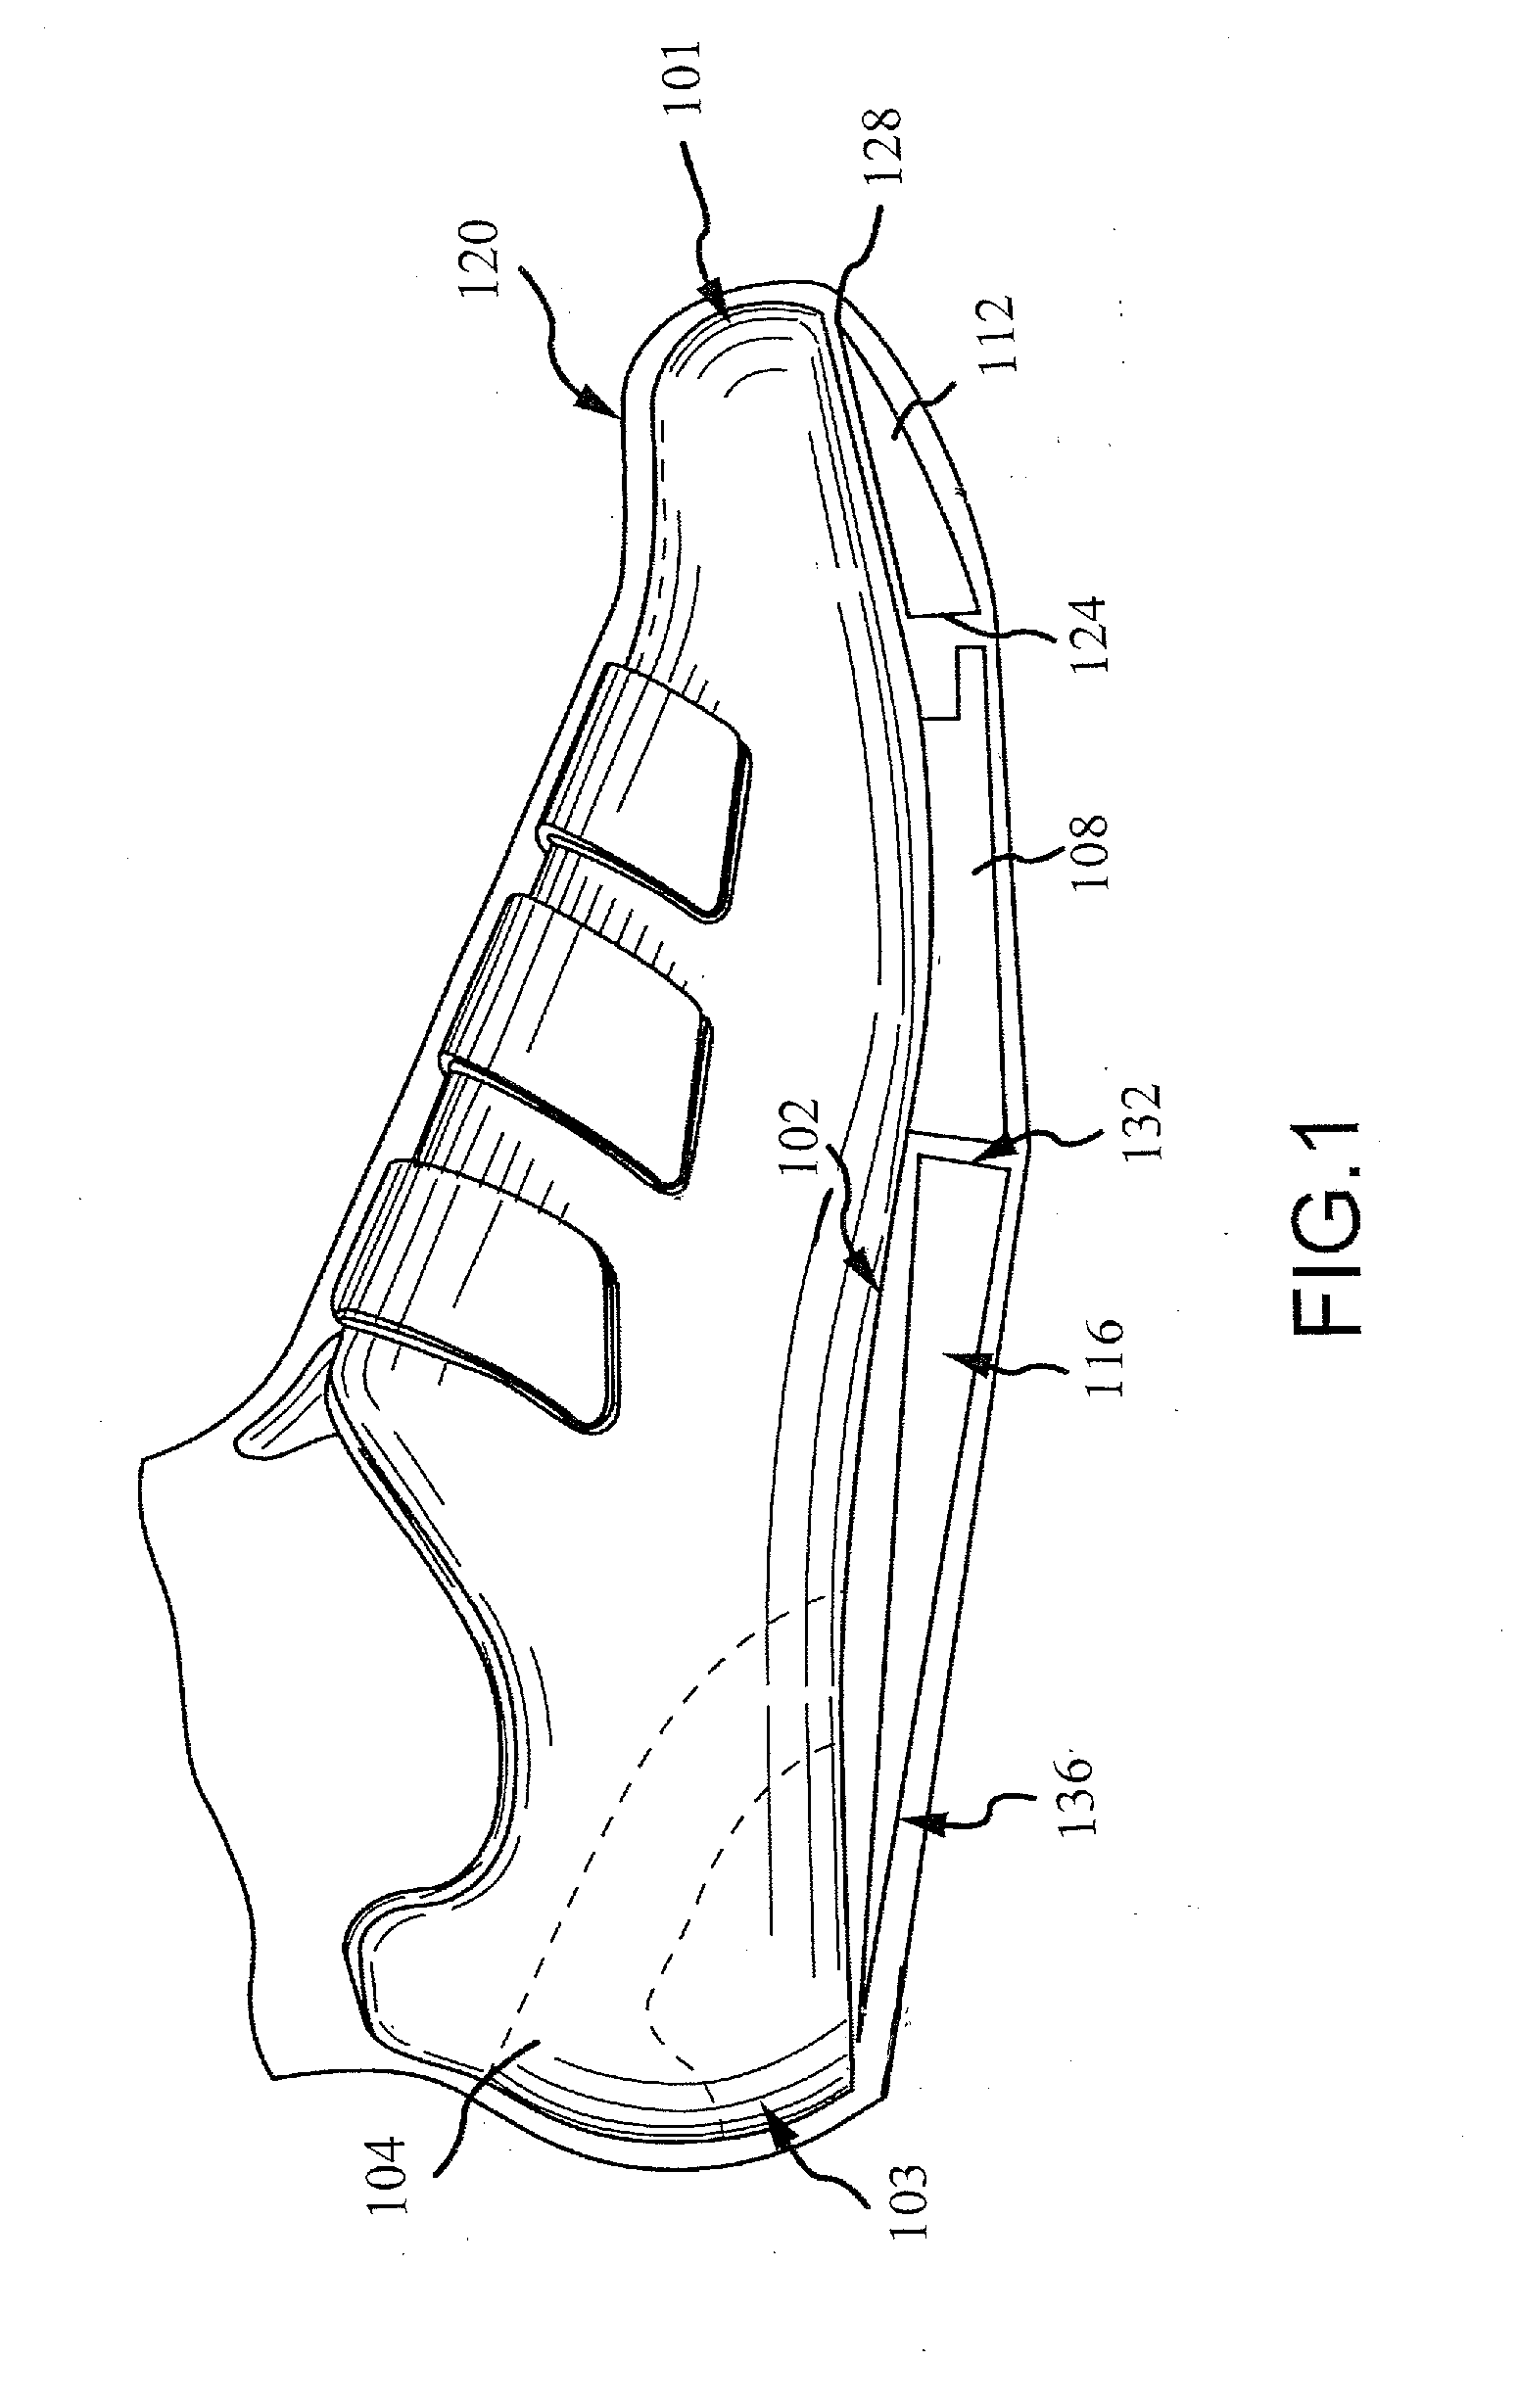 Aerodynamic bicycle shoe components